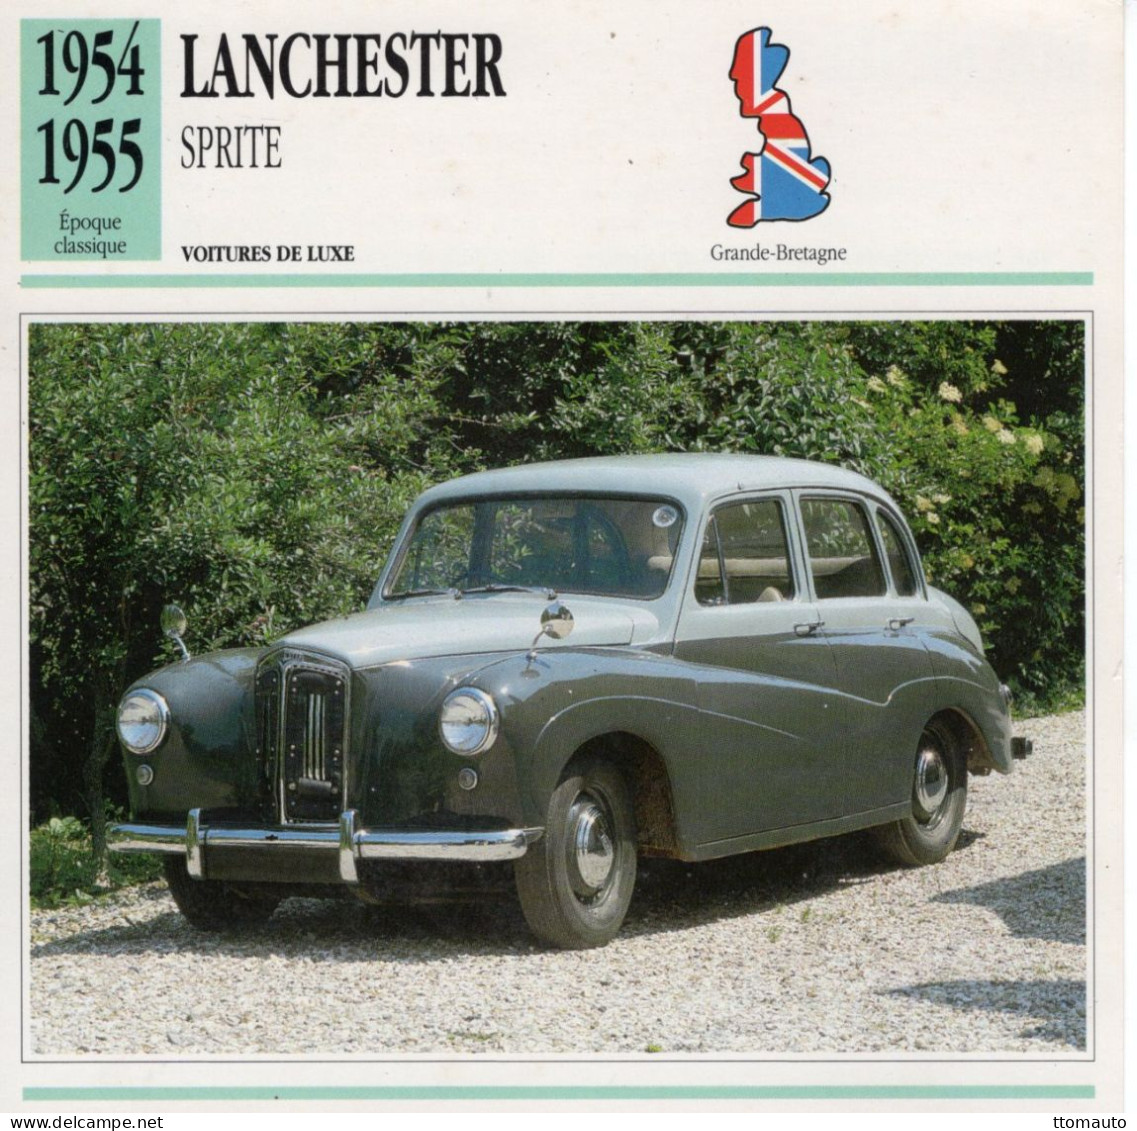 Lanchester Sprite  -  1955  - Voiture De Luxe -  Fiche Technique Automobile (GB) - Auto's